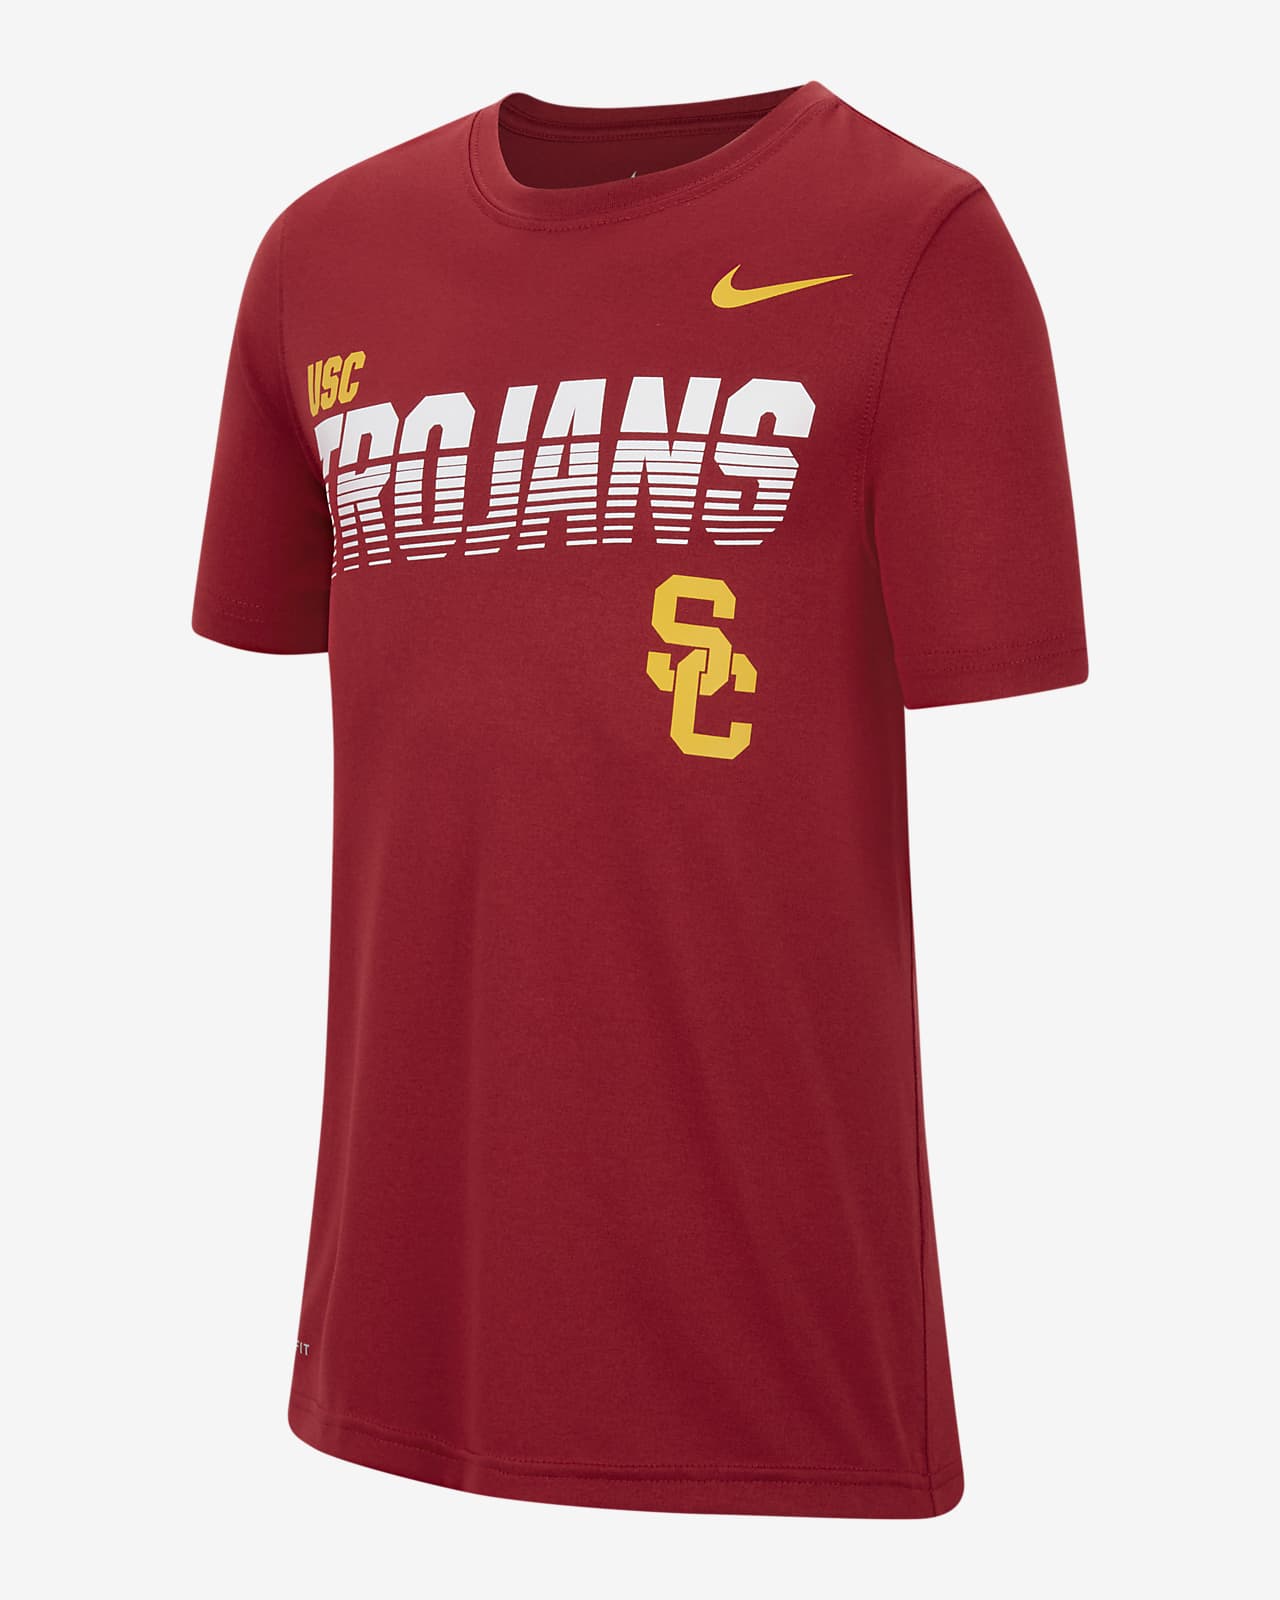 USC Legend Big Kids' (Boys') Nike Football T-Shirt. Nike.com